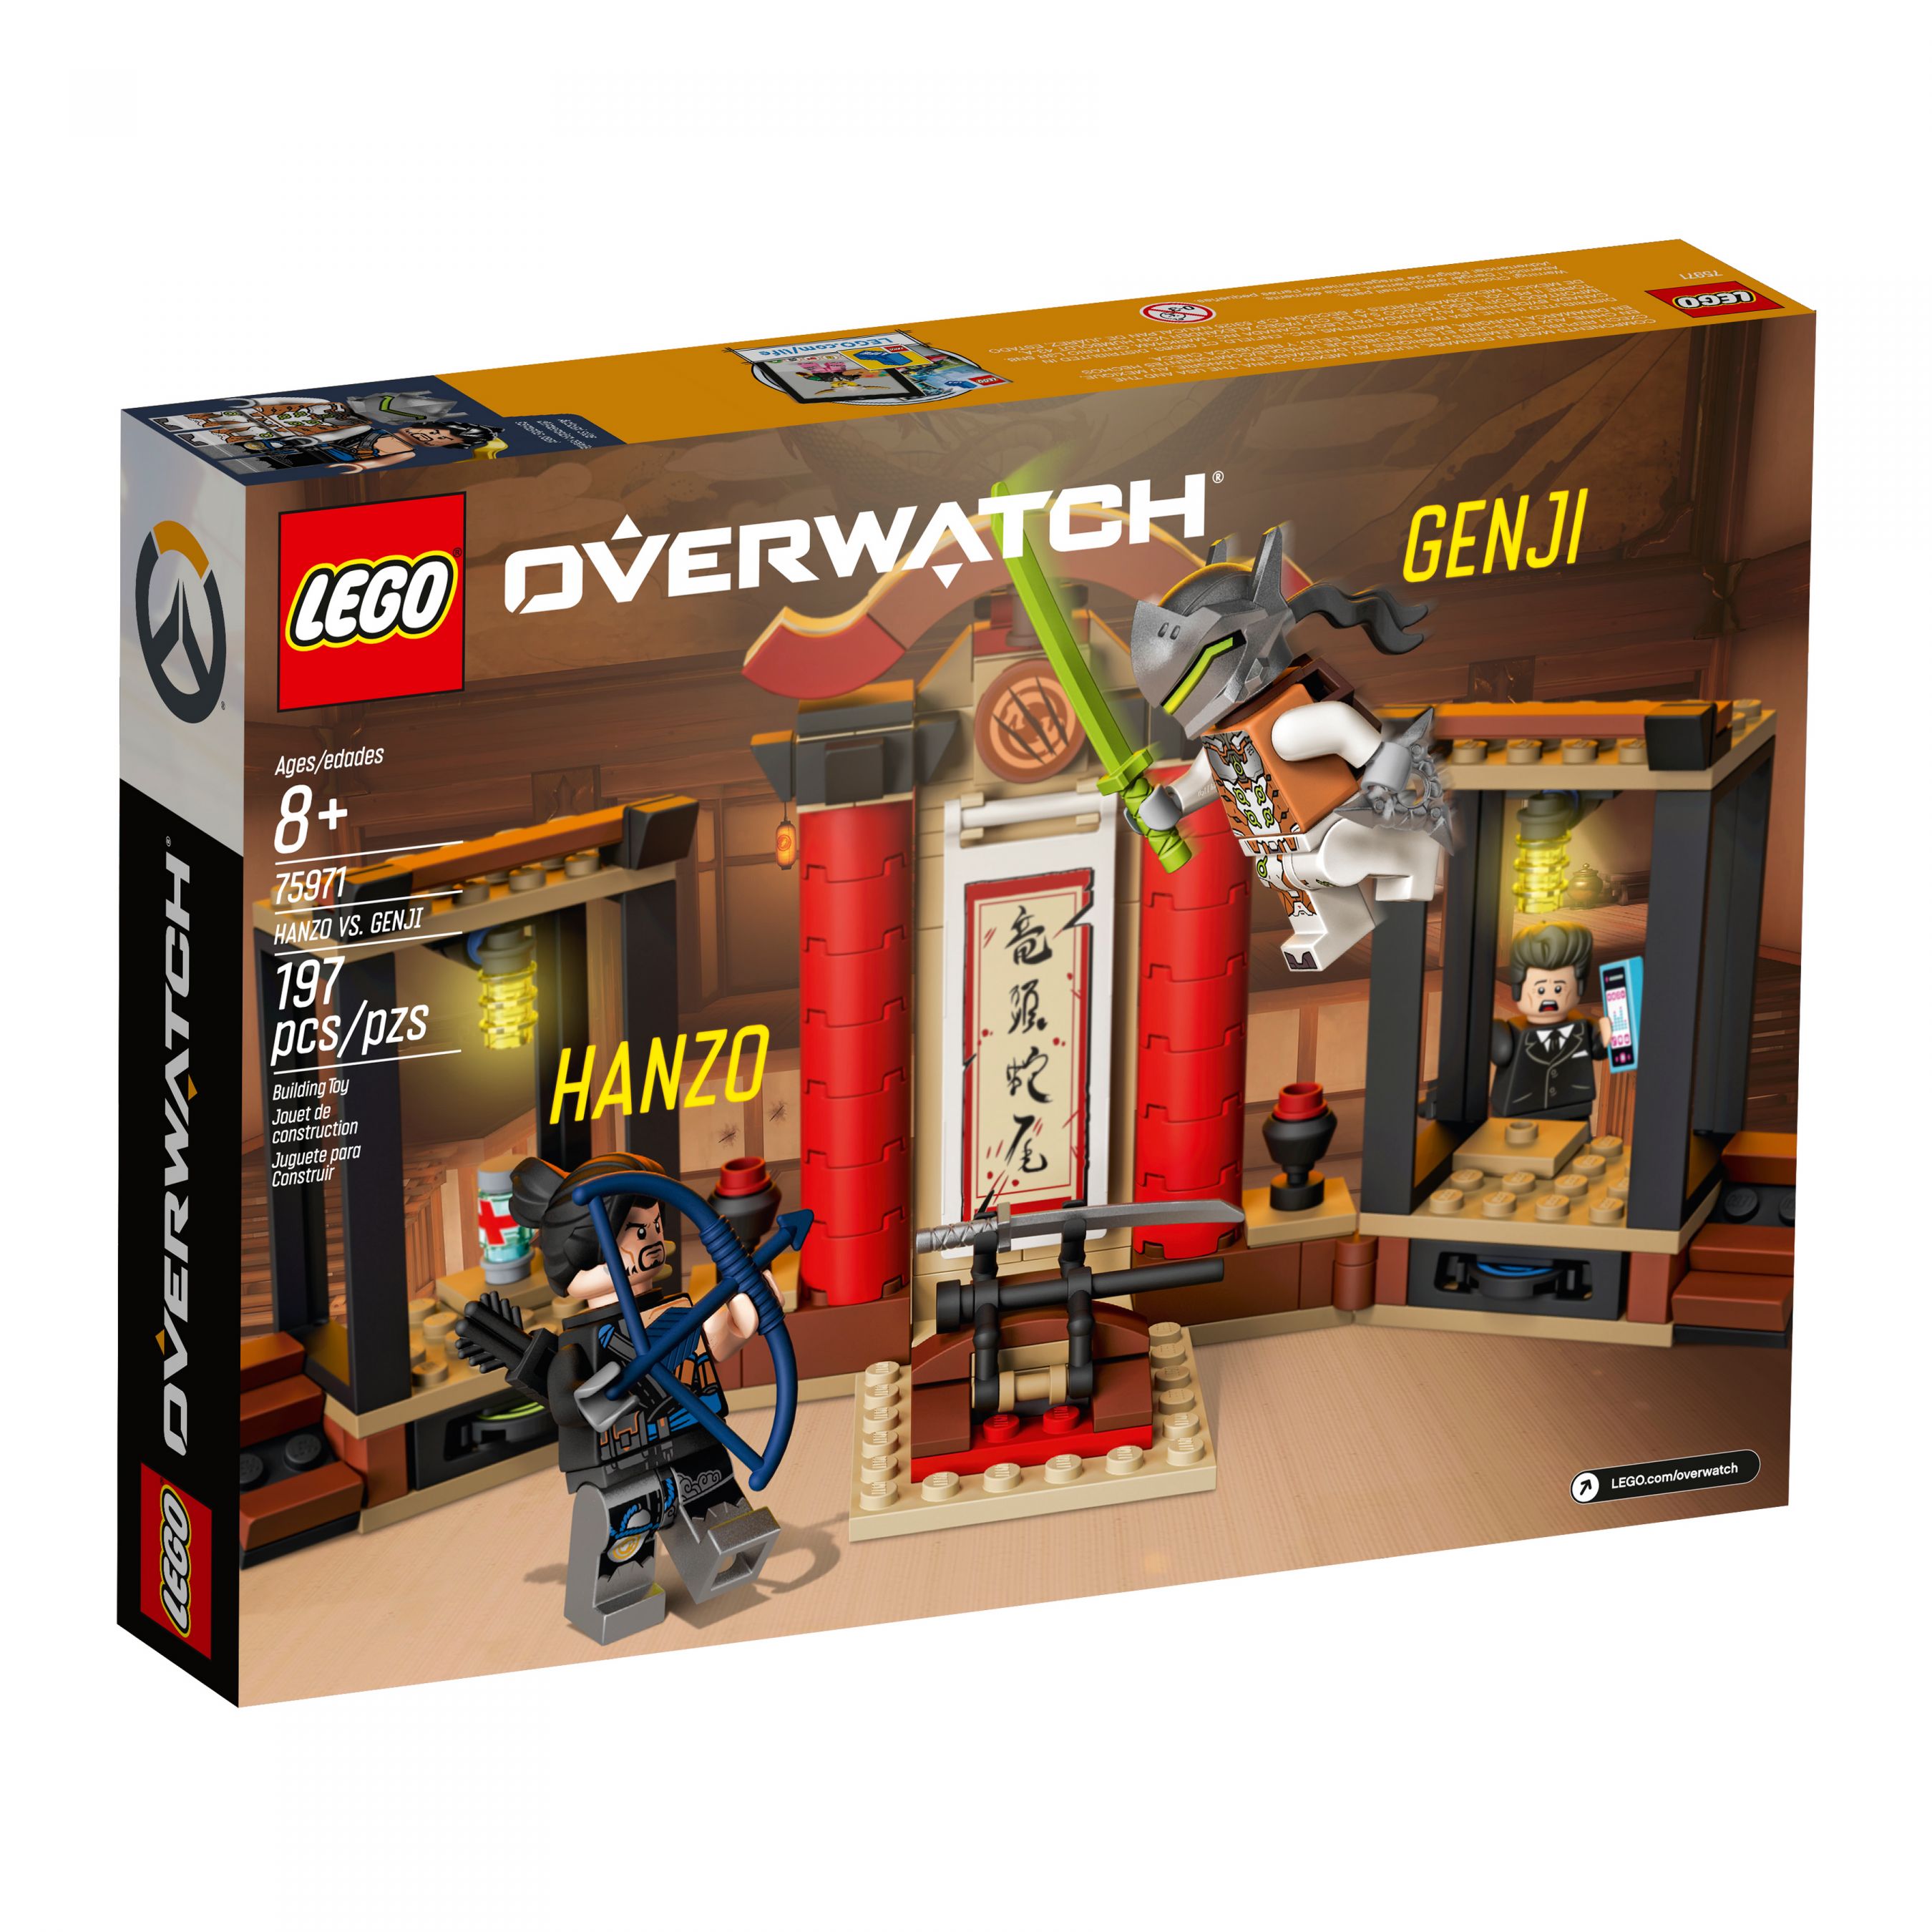 LEGO Overwatch 75971 Hanzo vs. Genji LEGO_75971_alt4.jpg